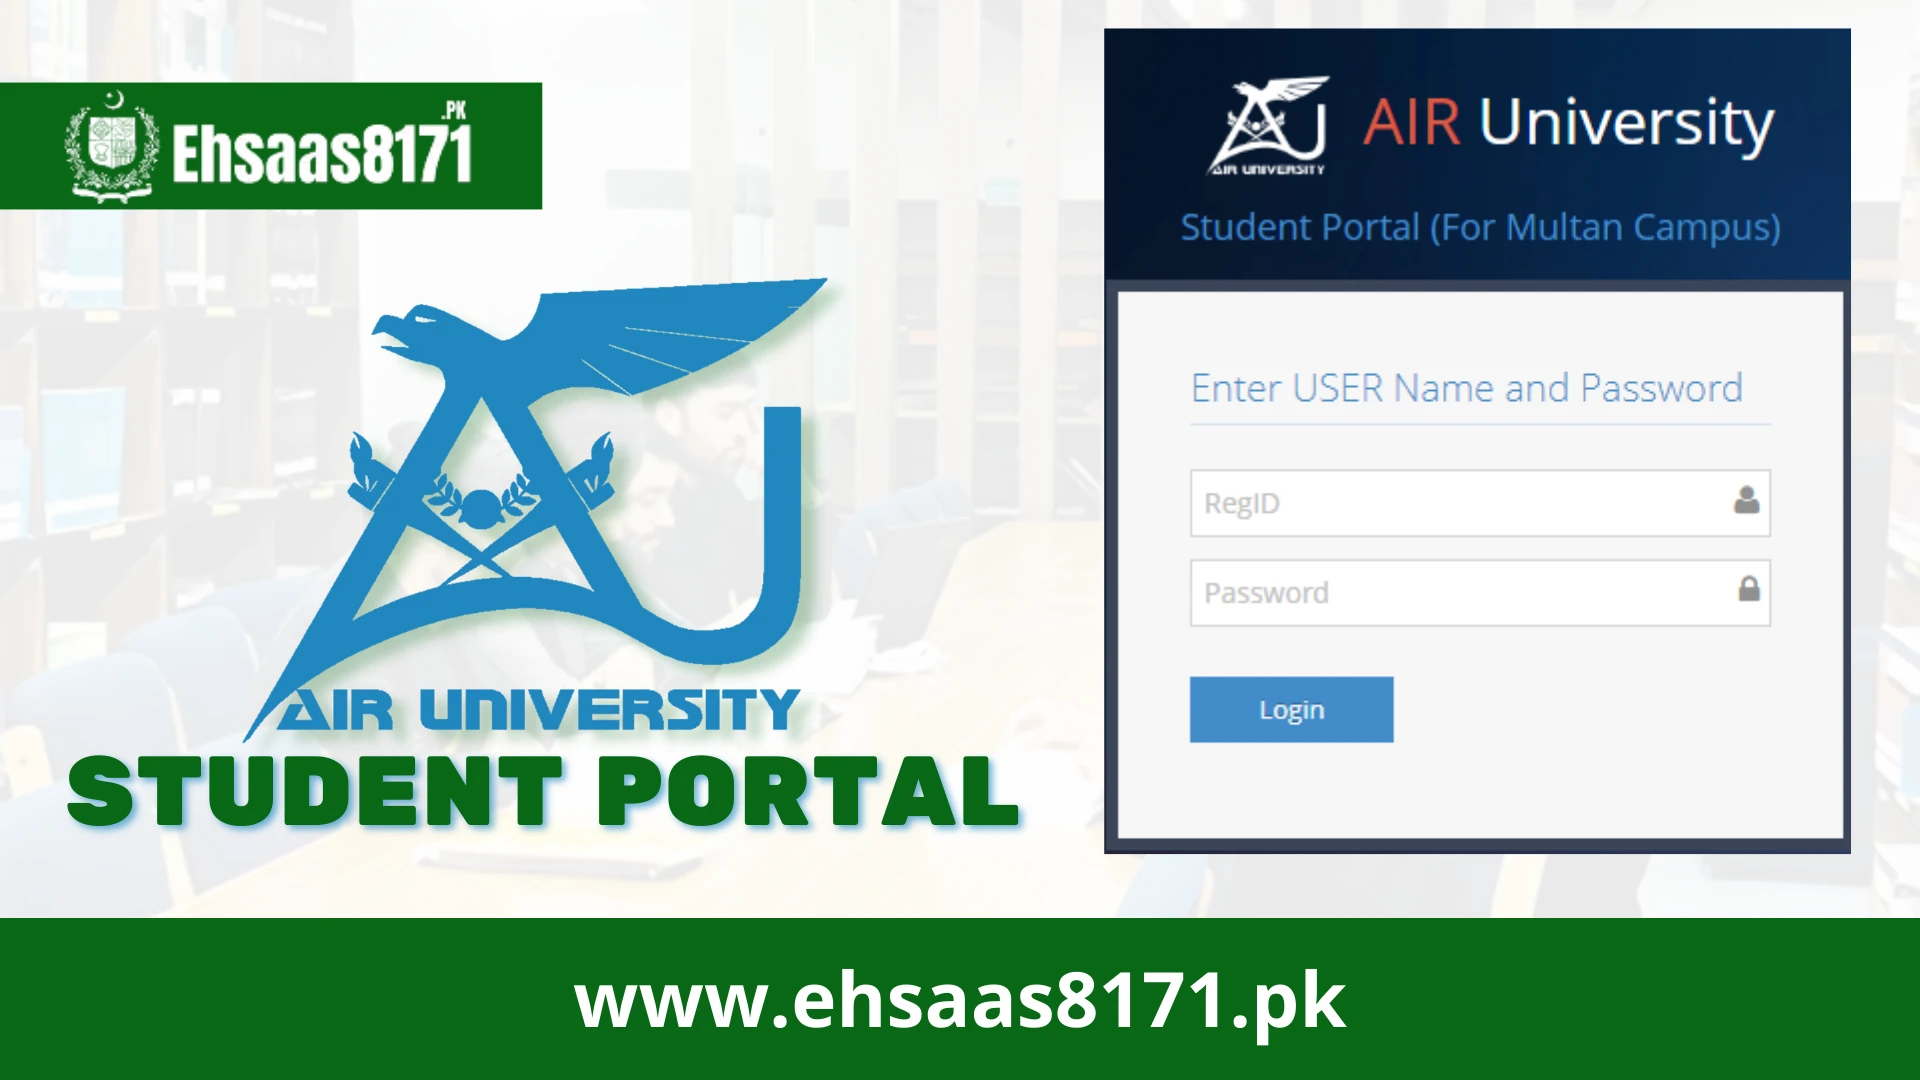 Air University Student Portal